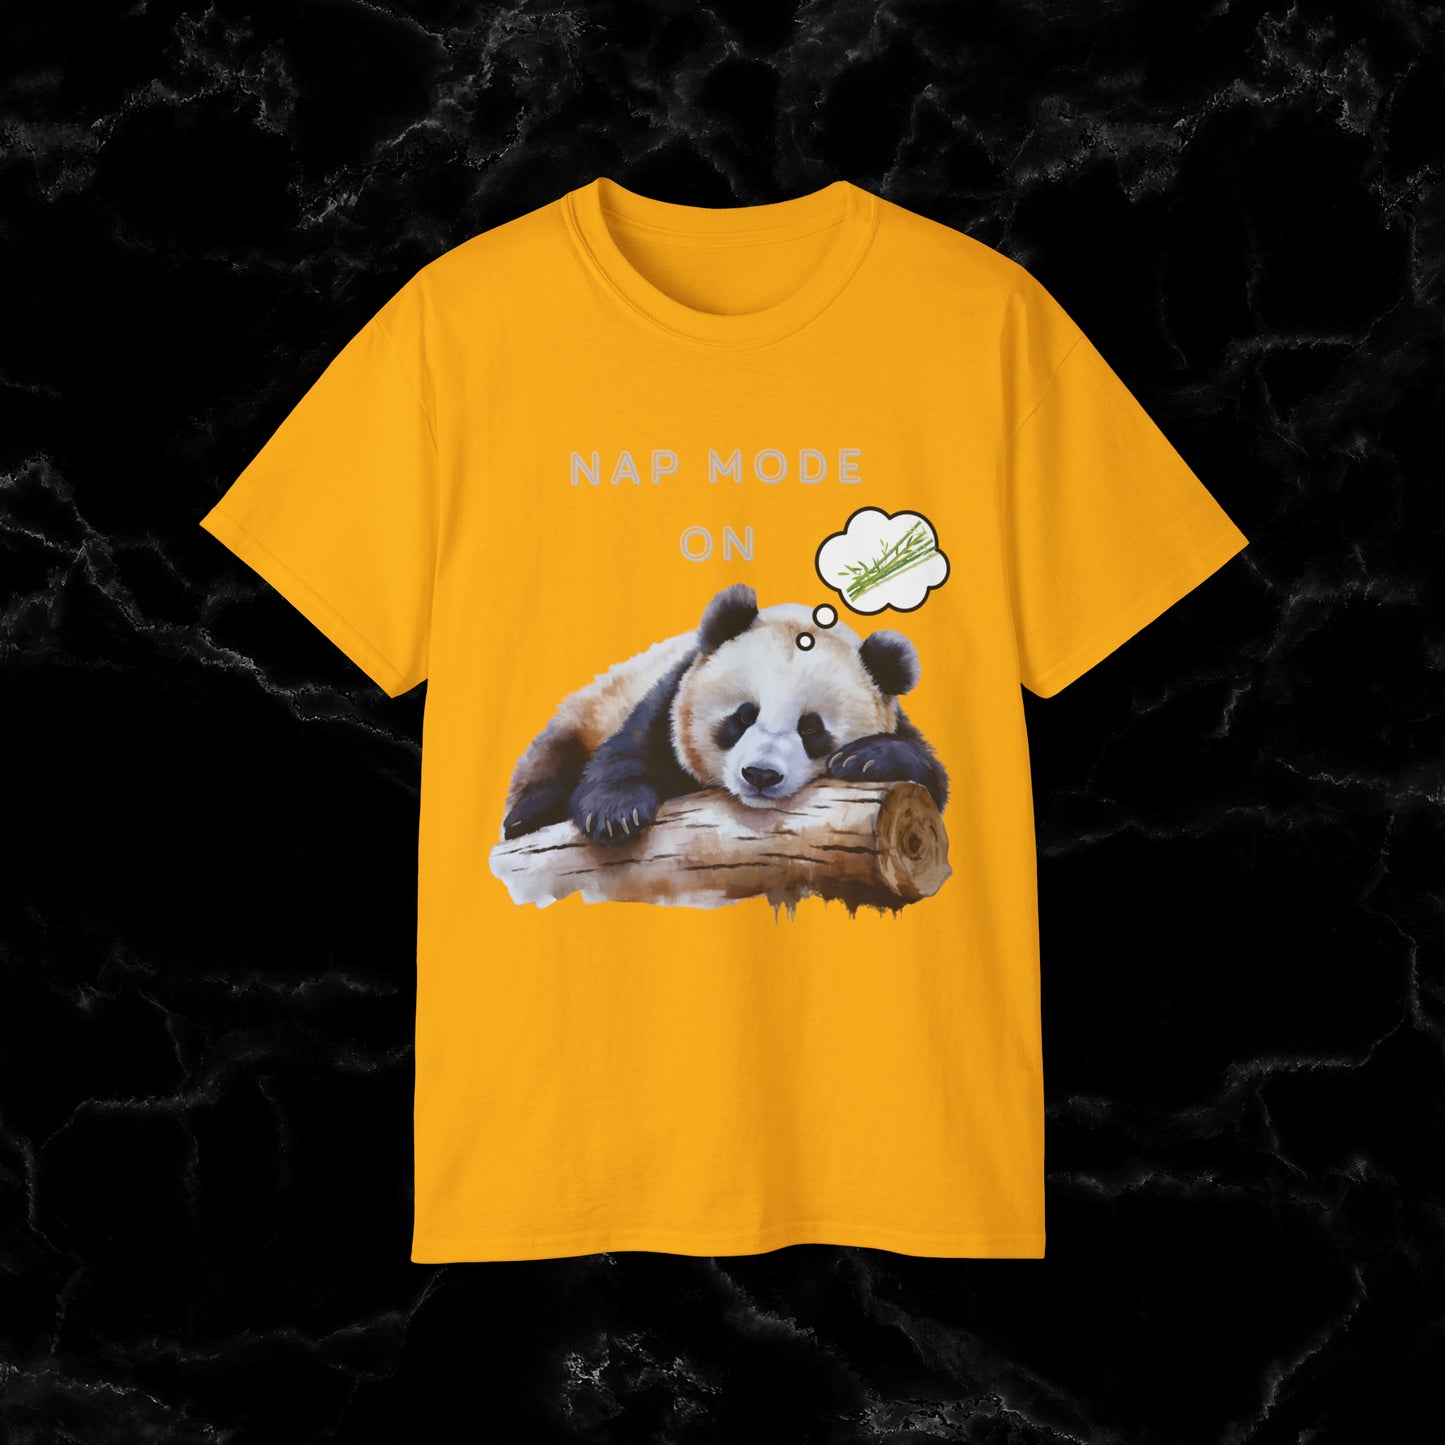 Nap Time Panda Unisex Funny Tee - Hilarious Panda Nap Mode On T-Shirt Gold S 